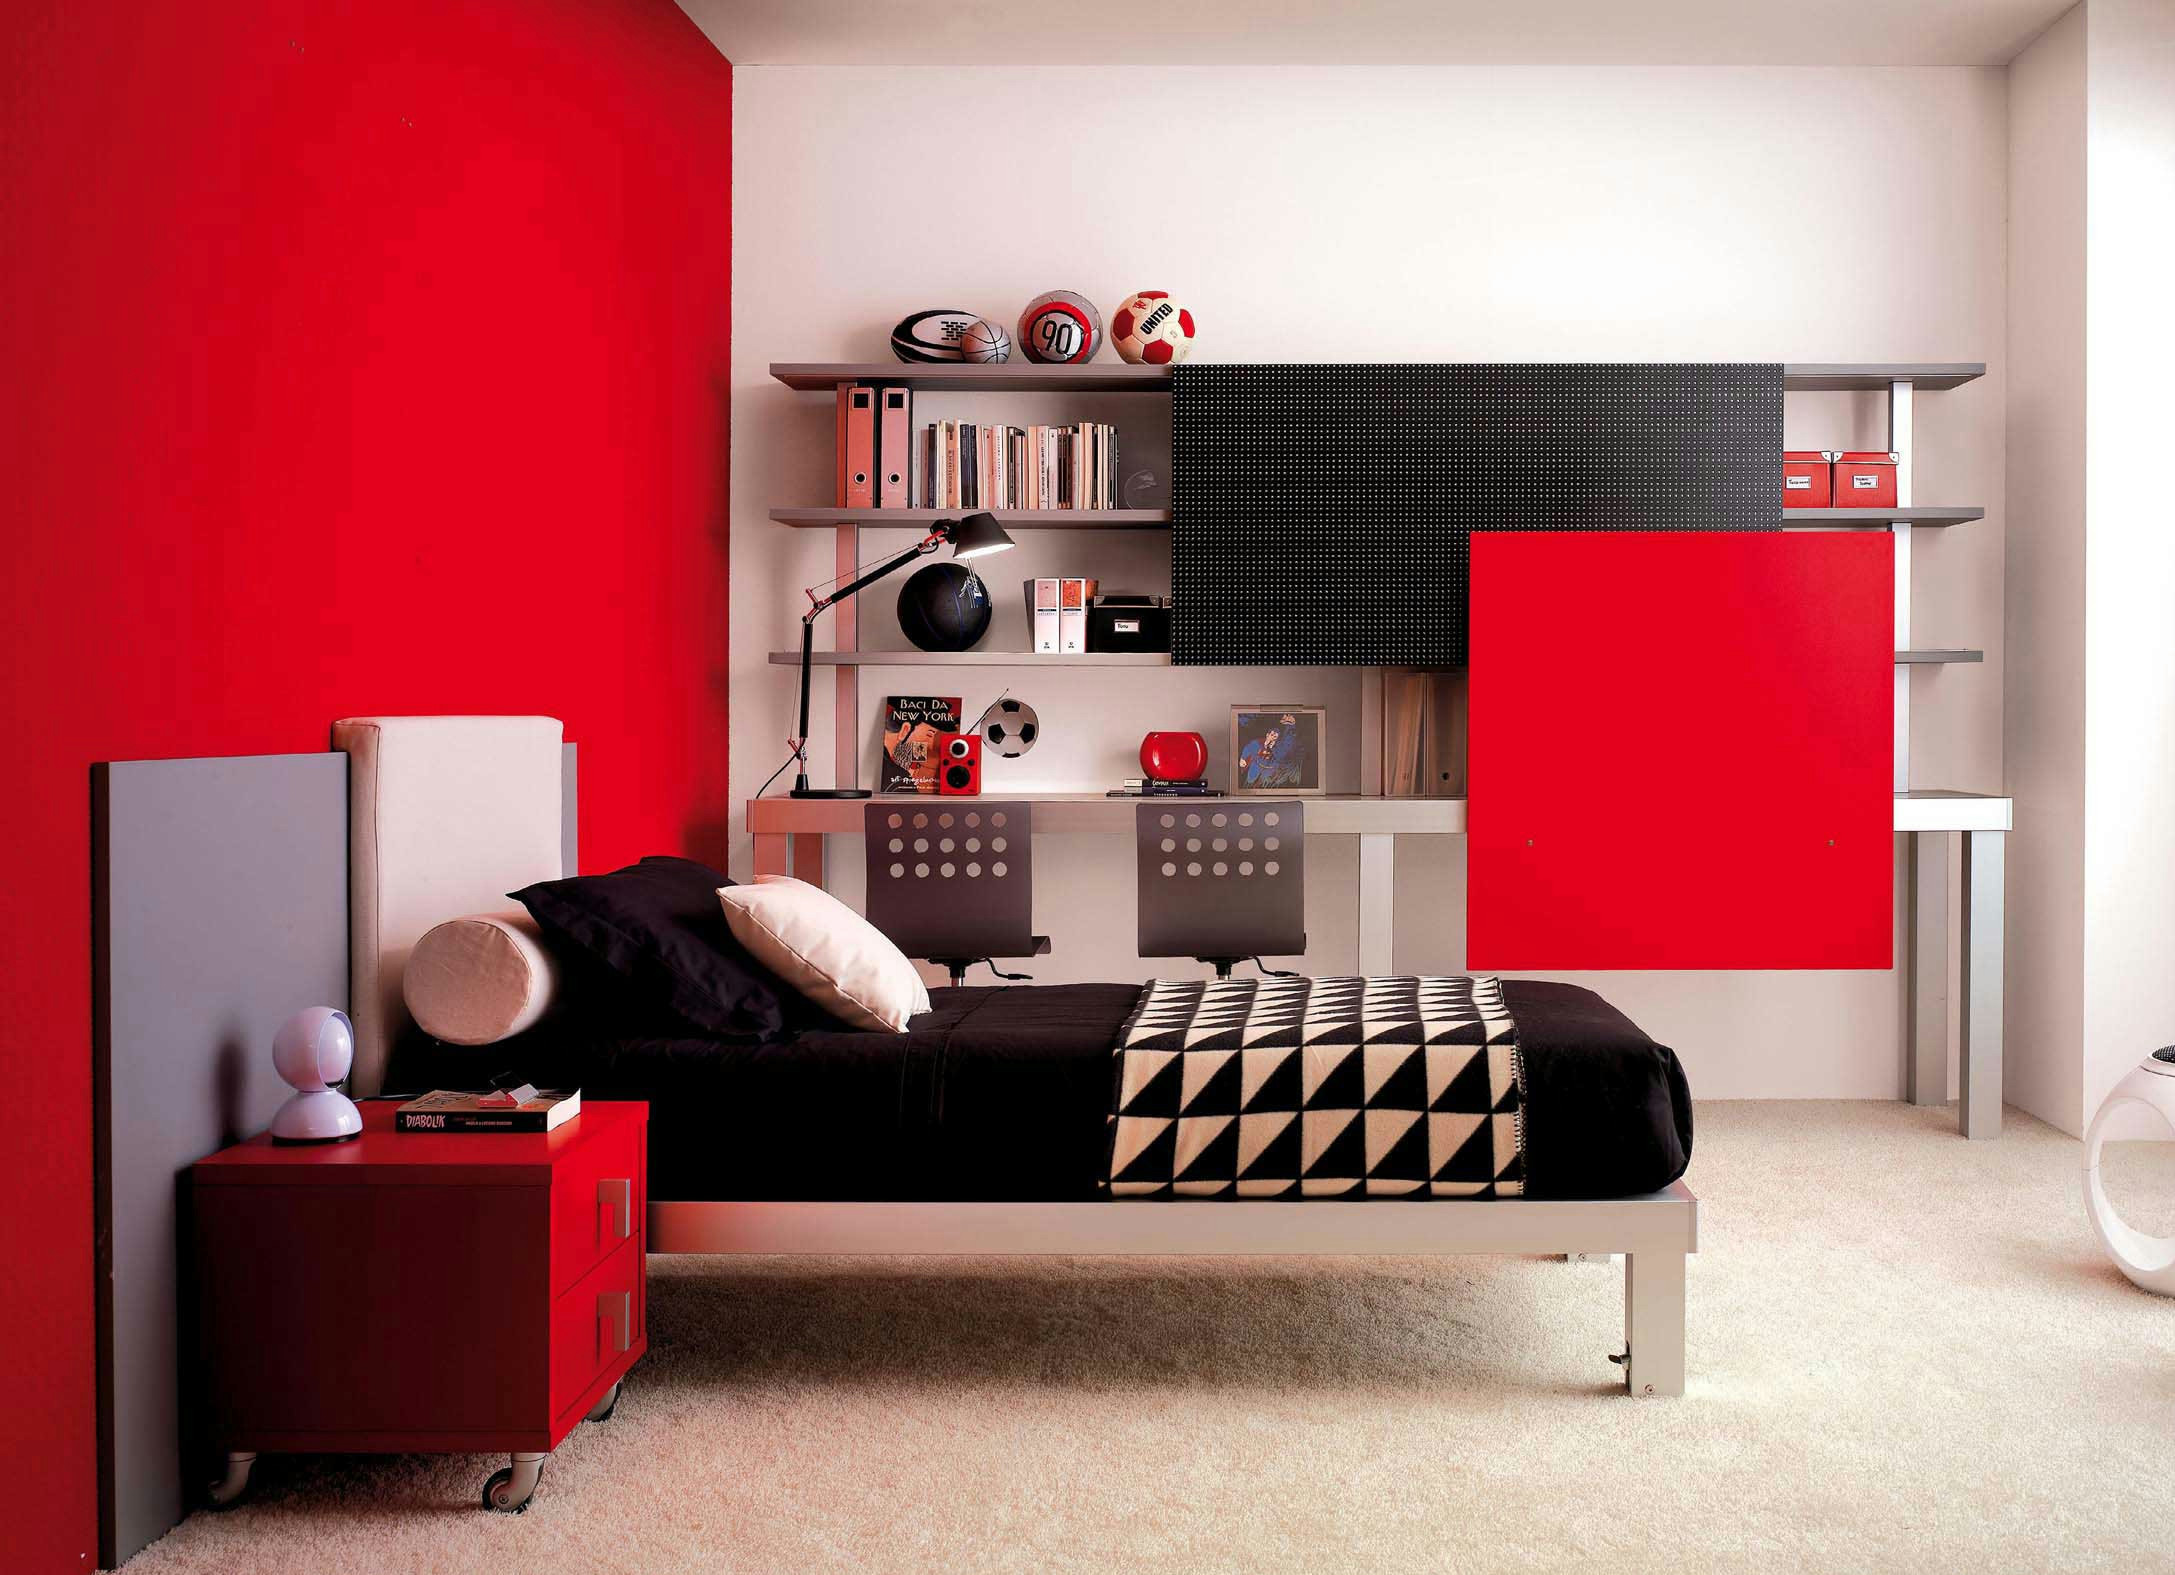 2175x1575 ... Bedroom Red Cool Teenage Cool Bedroom Wallpaper Designs Hd with Bedroom  Red Cool Teenage Cool Bedroom ...